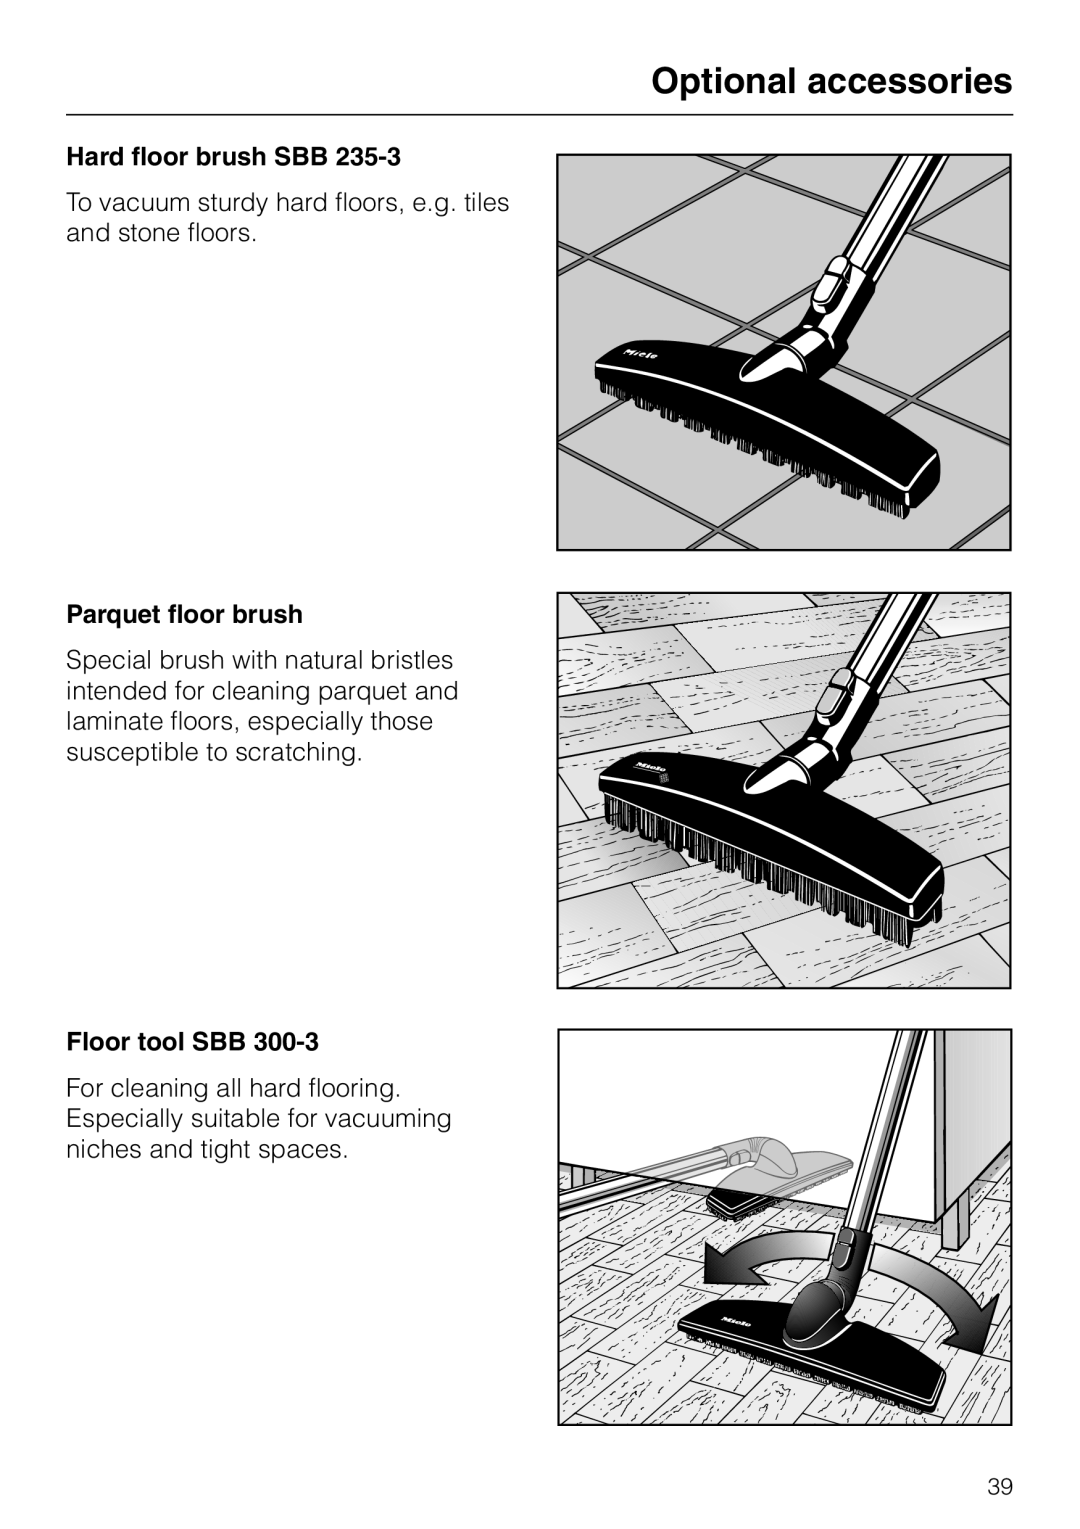 Miele S 5000 operating instructions Optional accessories, Hard floor brush SBB, Parquet floor brush, Floor tool SBB 